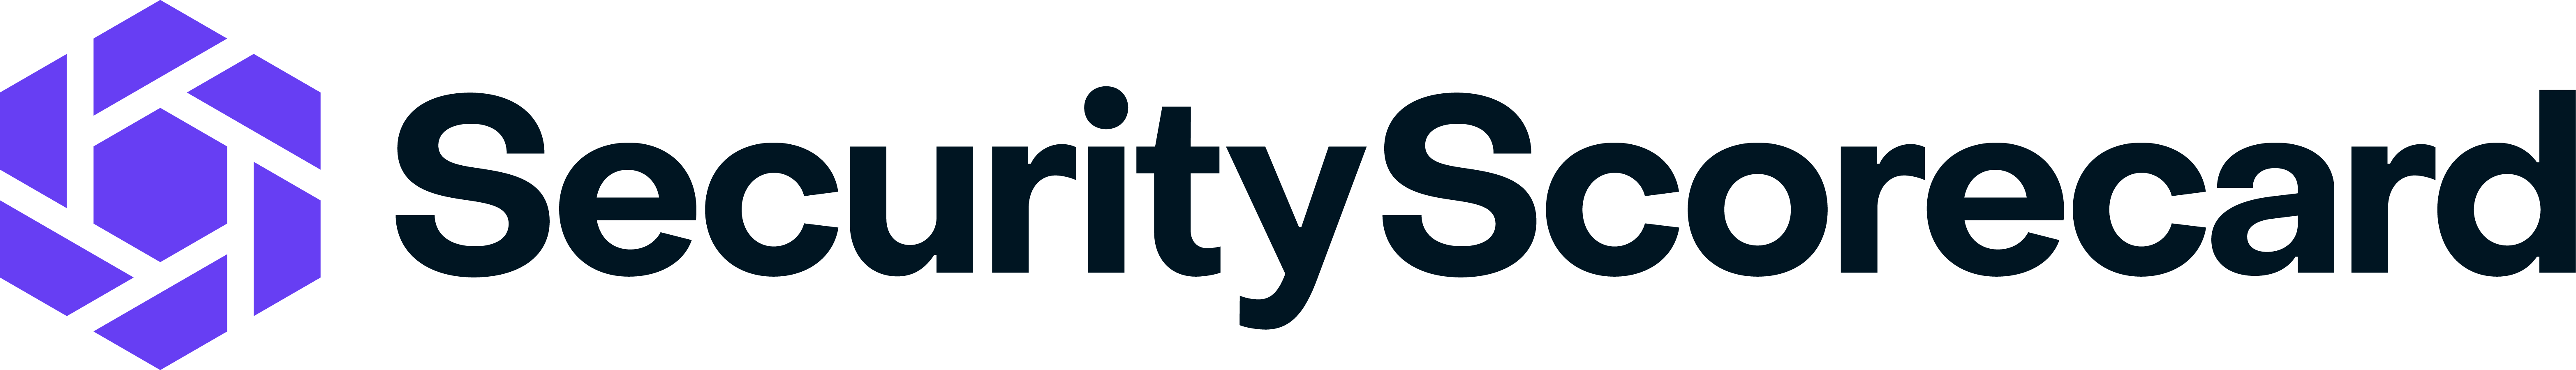 Logo SecurityScorecard